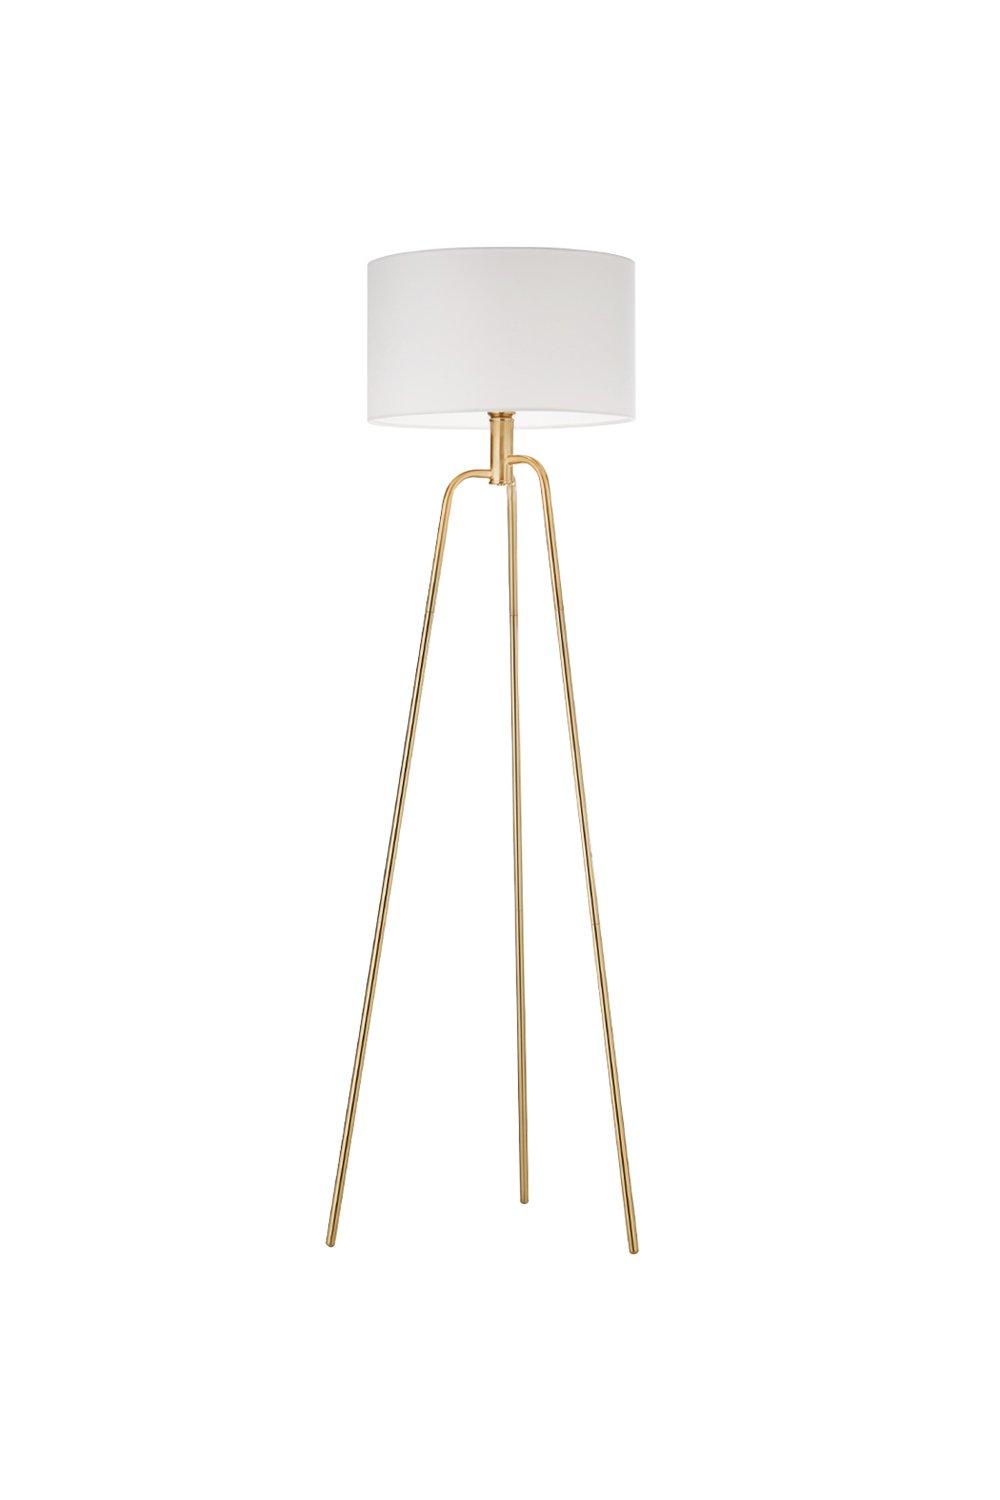 'Jerry' Floor Lamp Gold